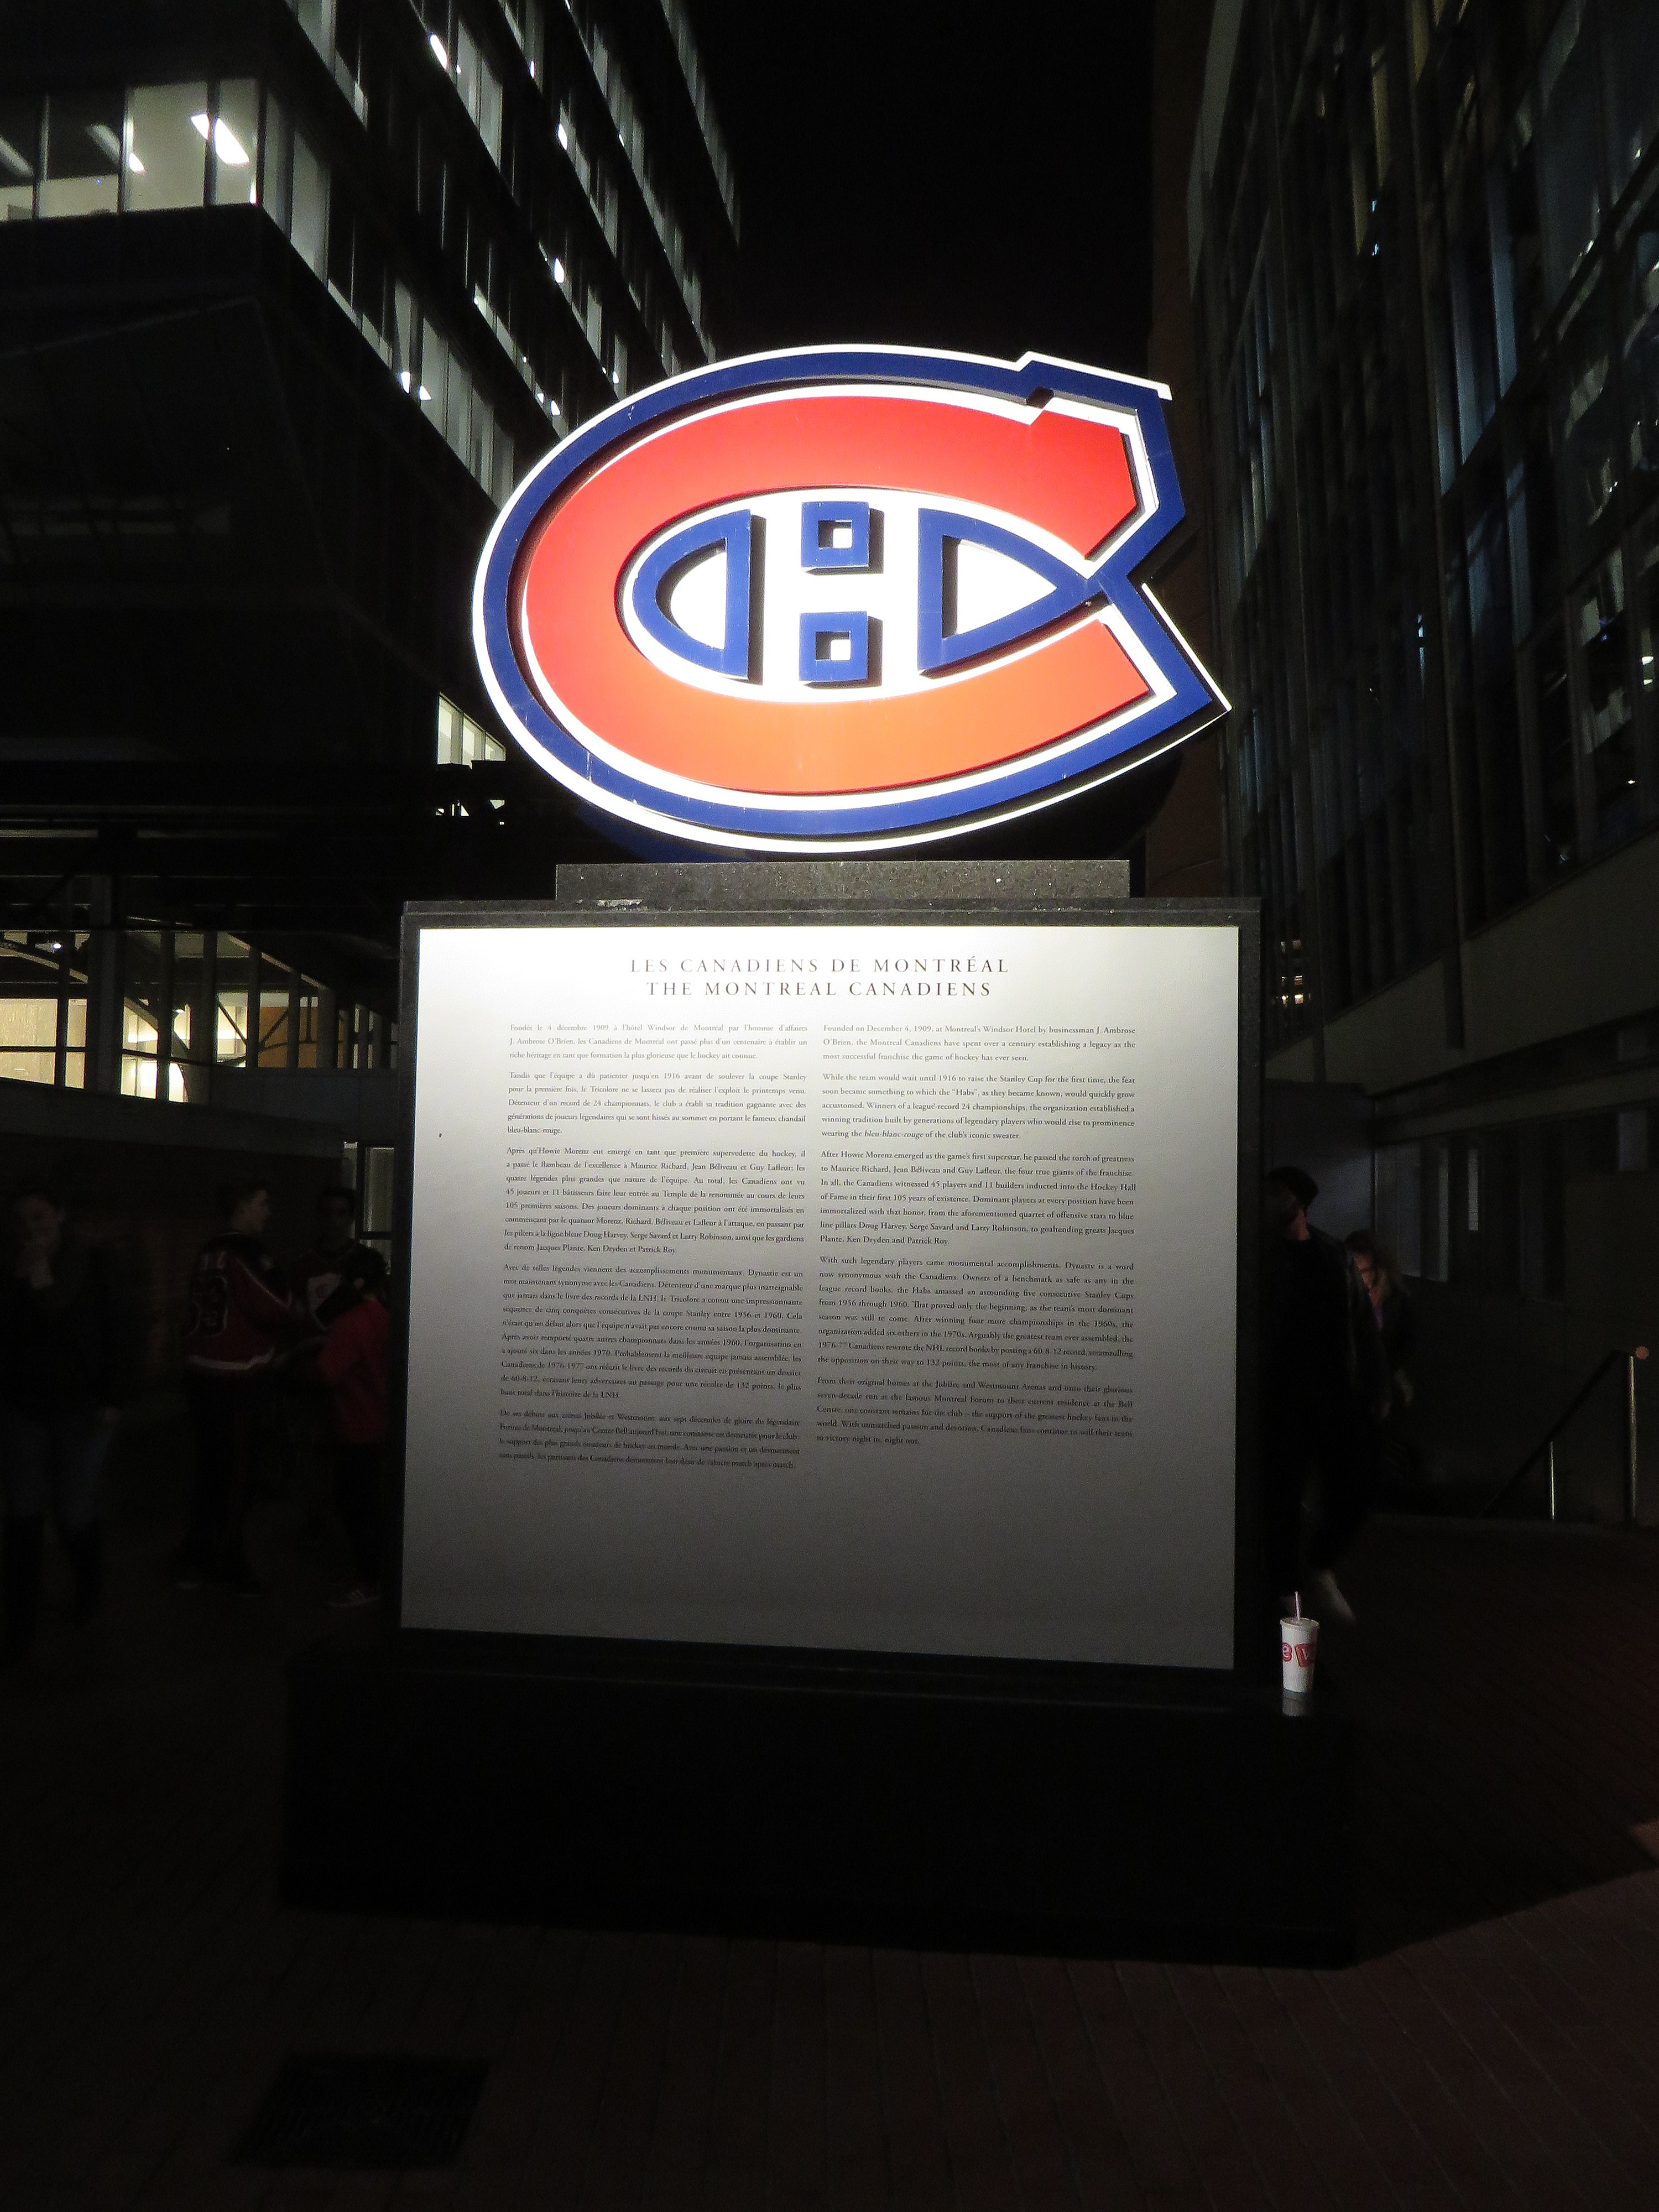 About the Canadiens - Les Canadiens de Montreal